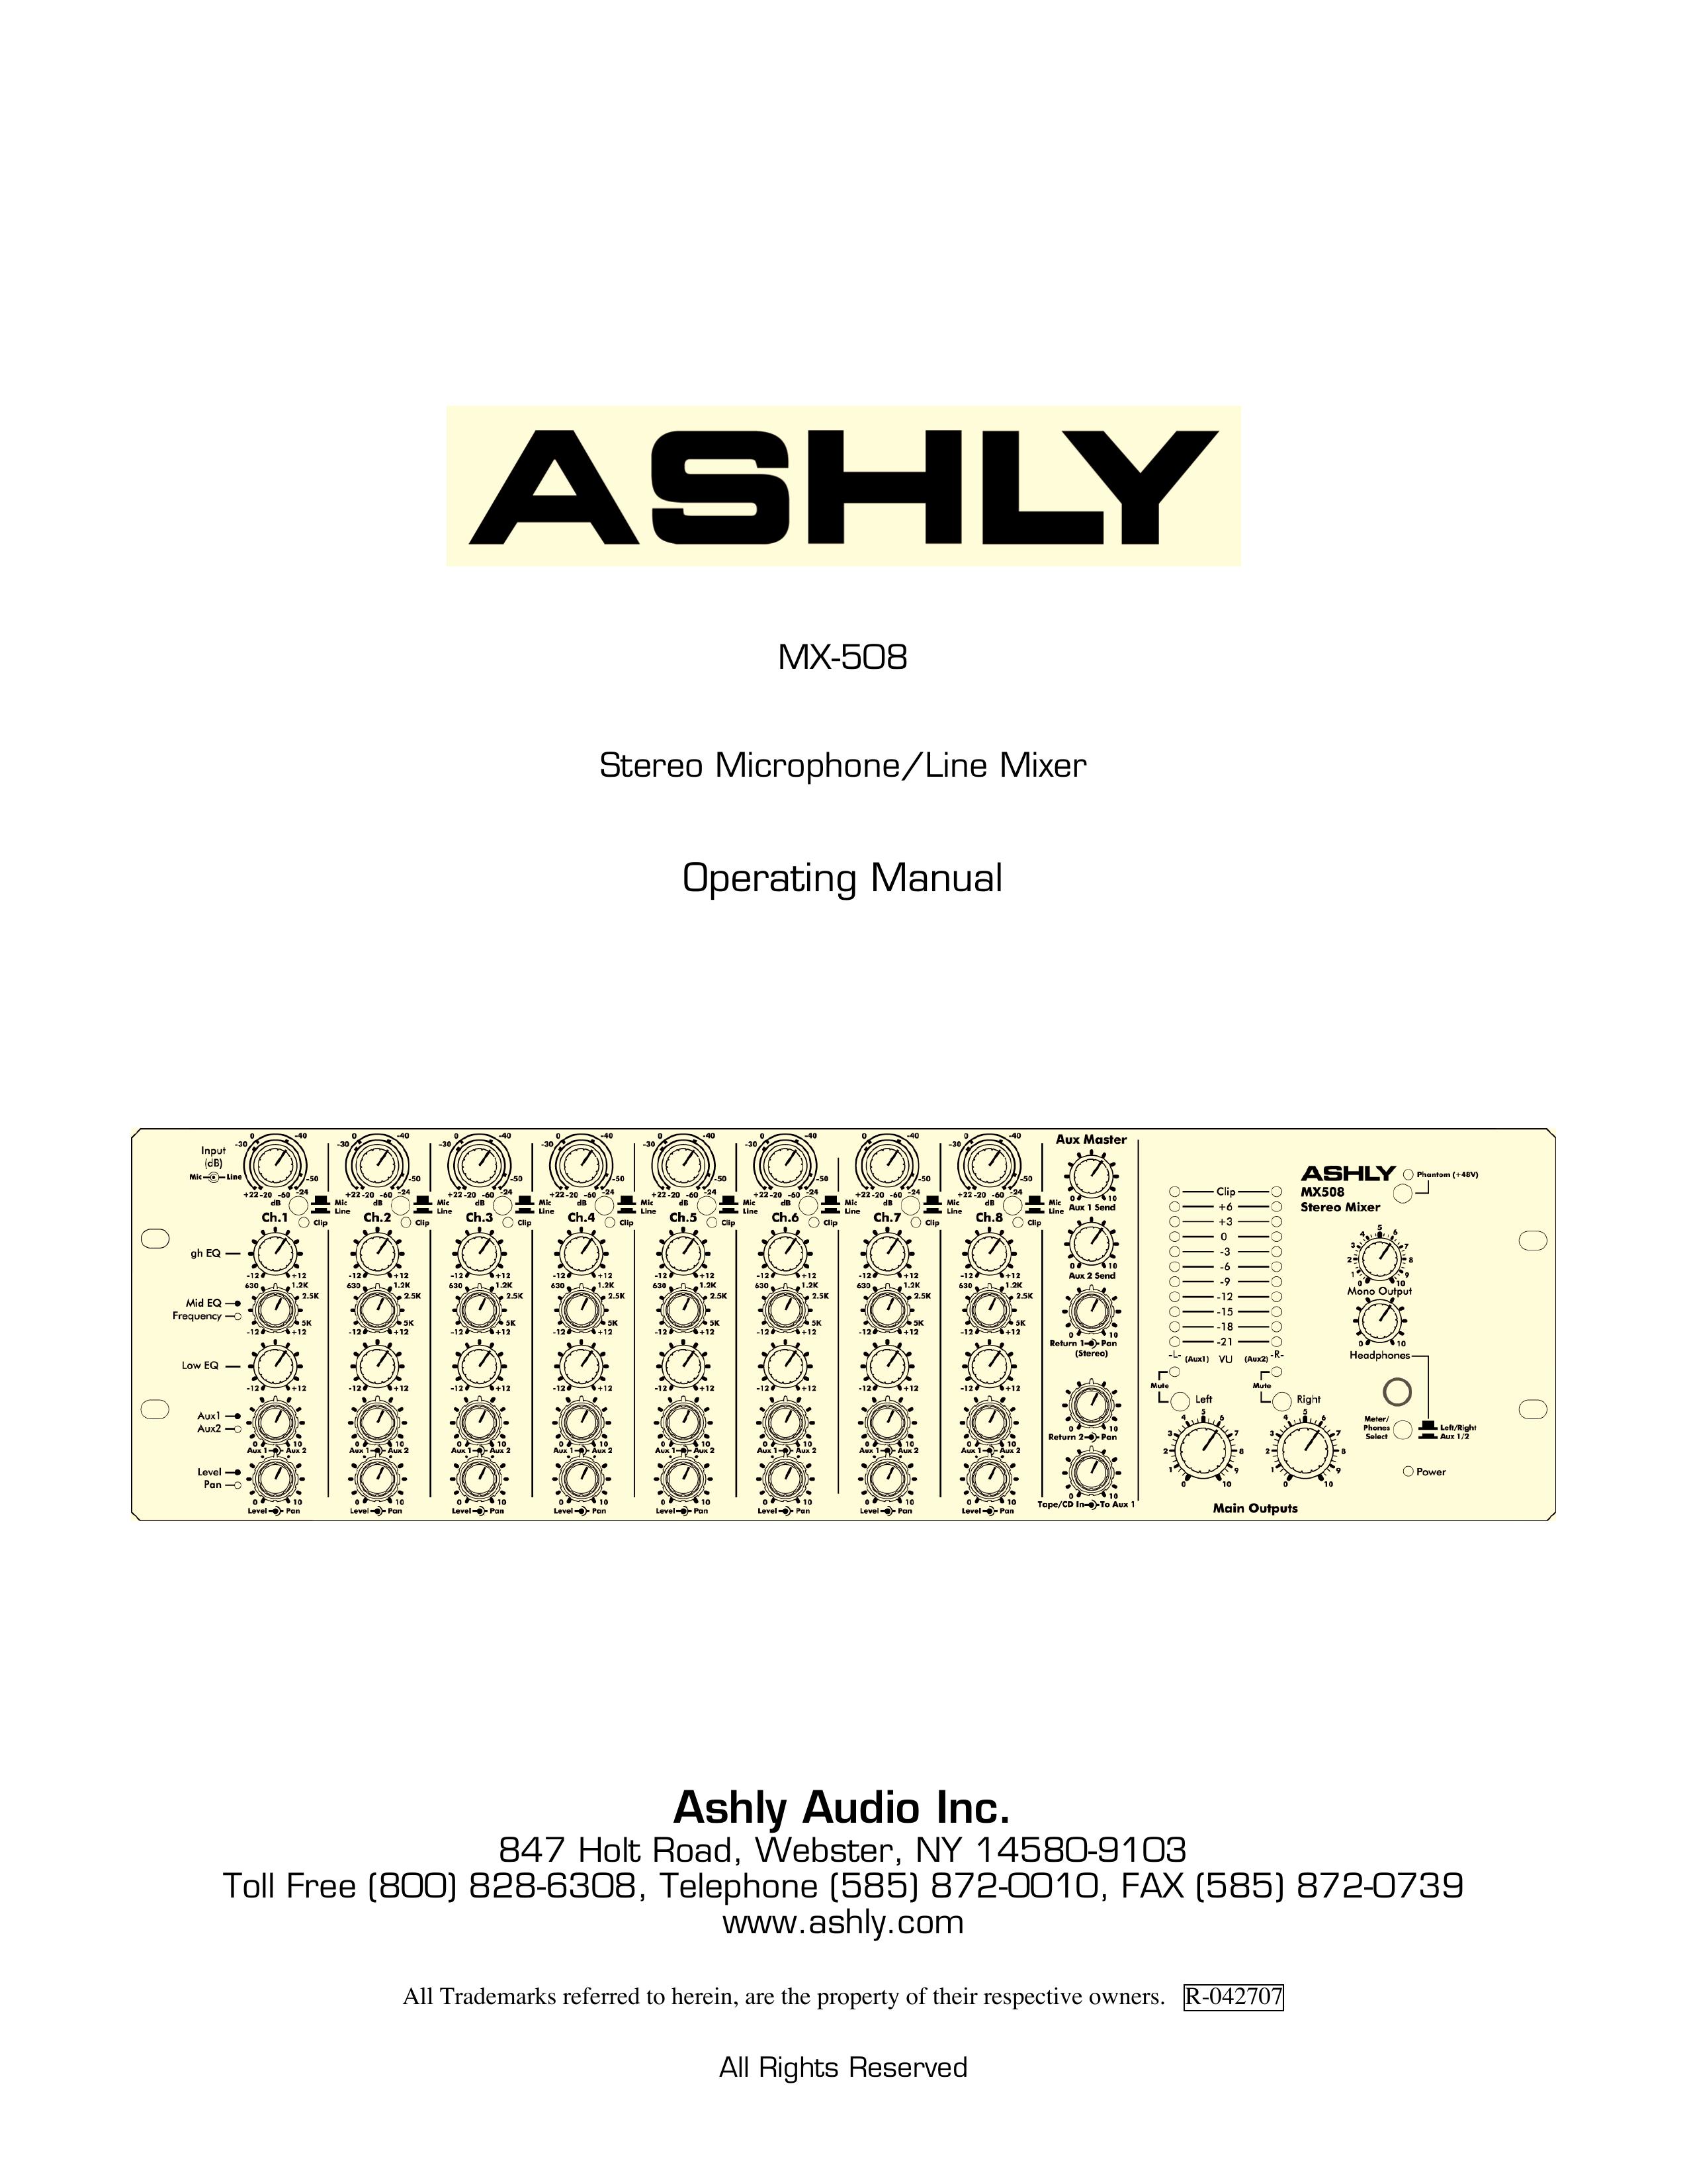 Ashly MX-508 Musical Instrument User Manual